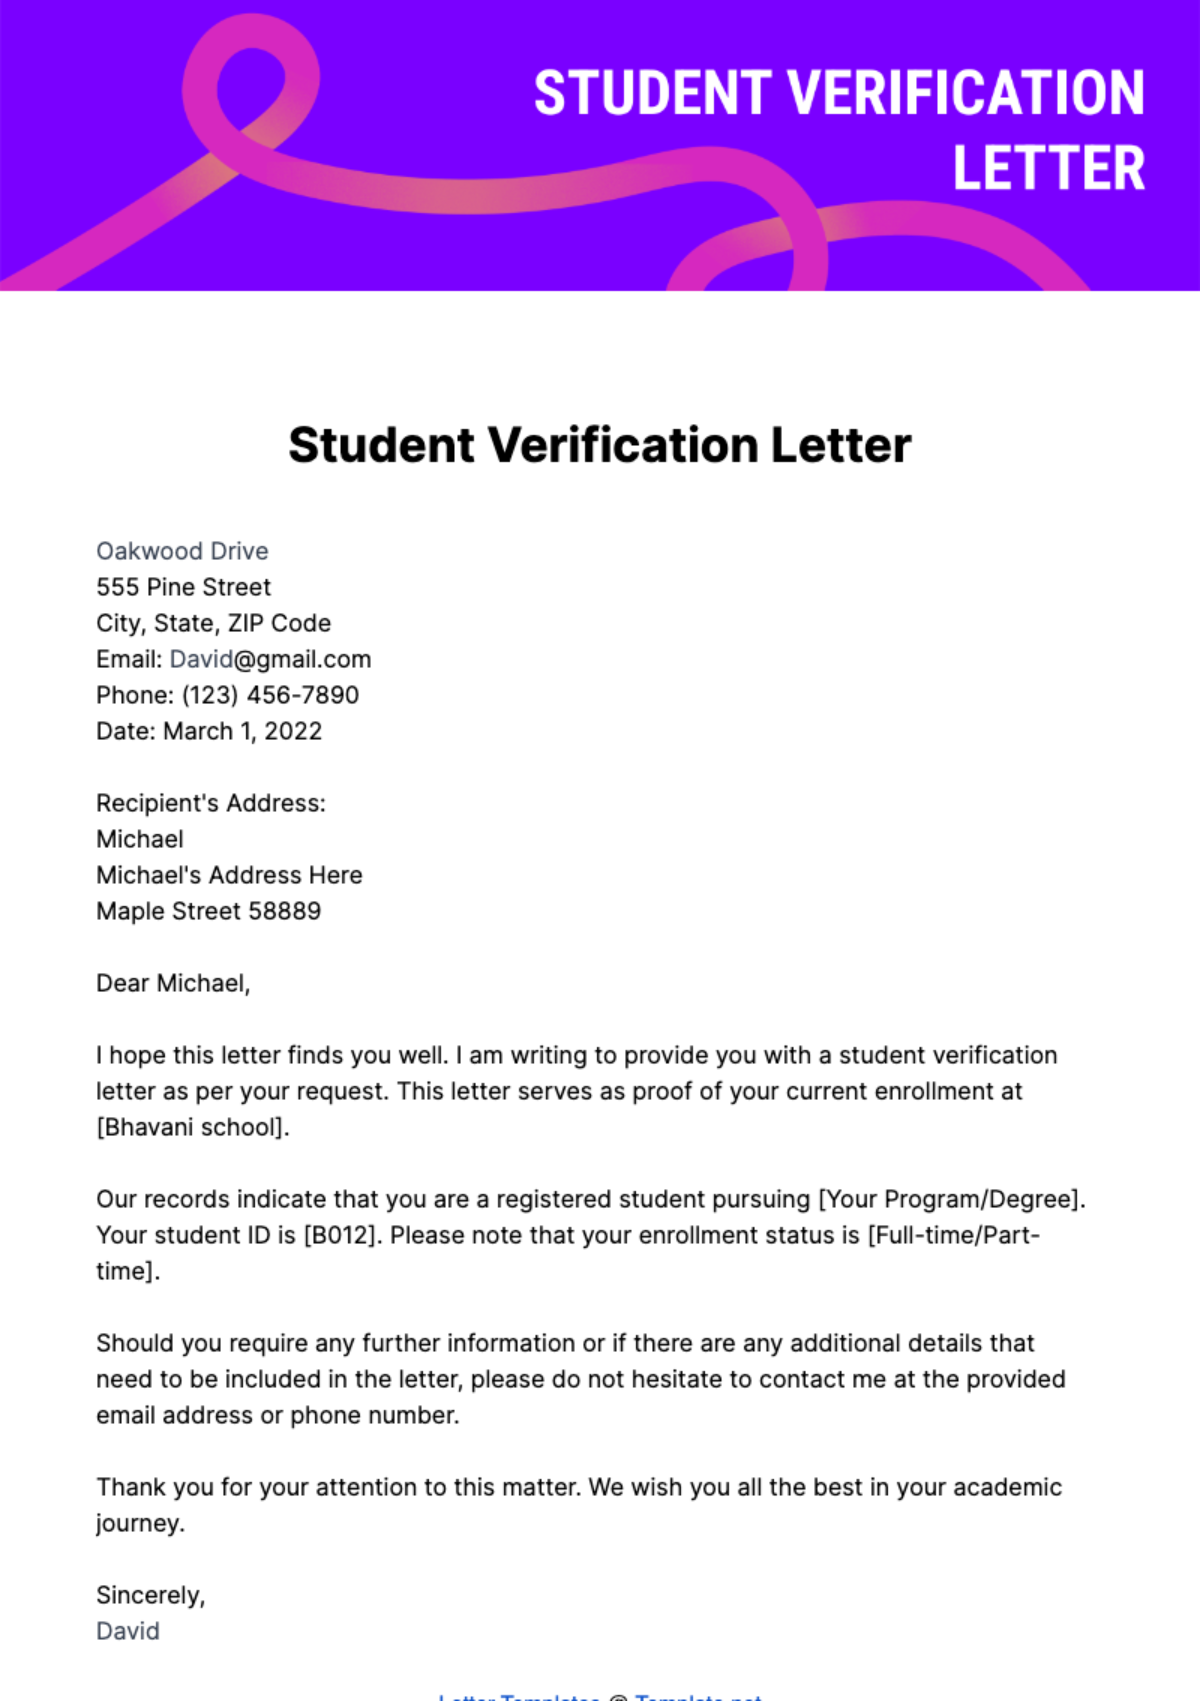 Student Verification Letter Template